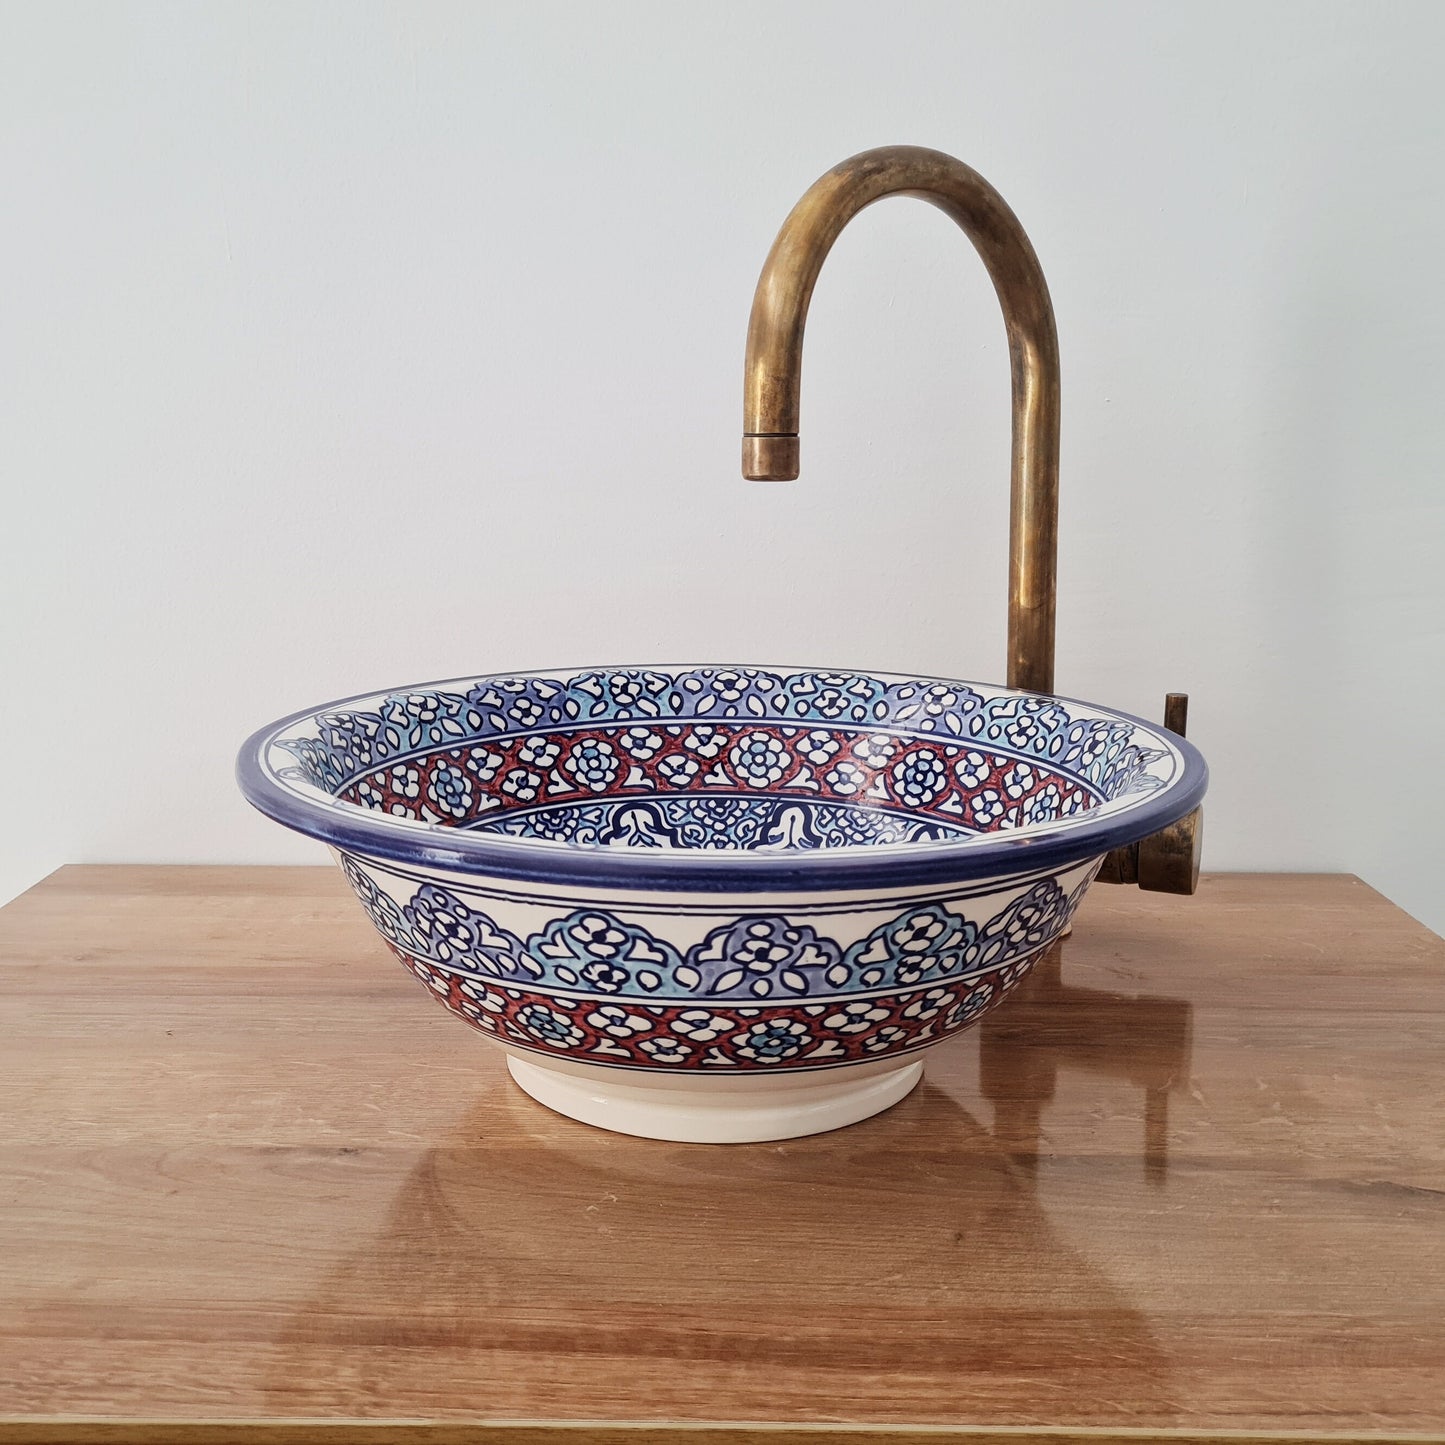 Moroccan sink | moroccan ceramic sink | bathroom sink | moroccan sink bowl #234